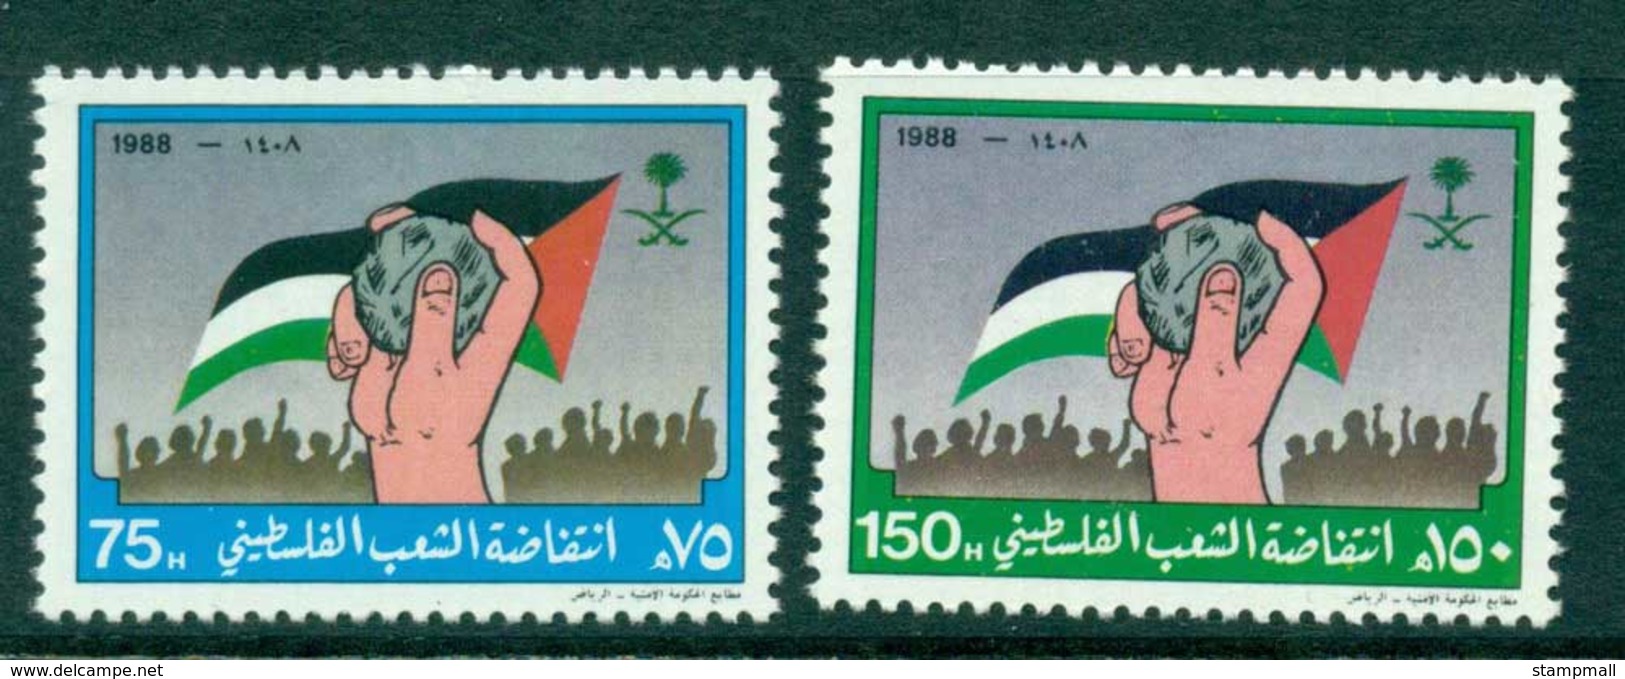 Saudi Arabia 1988 Palestinian Uprising MUH Lot26851 - Saudi Arabia